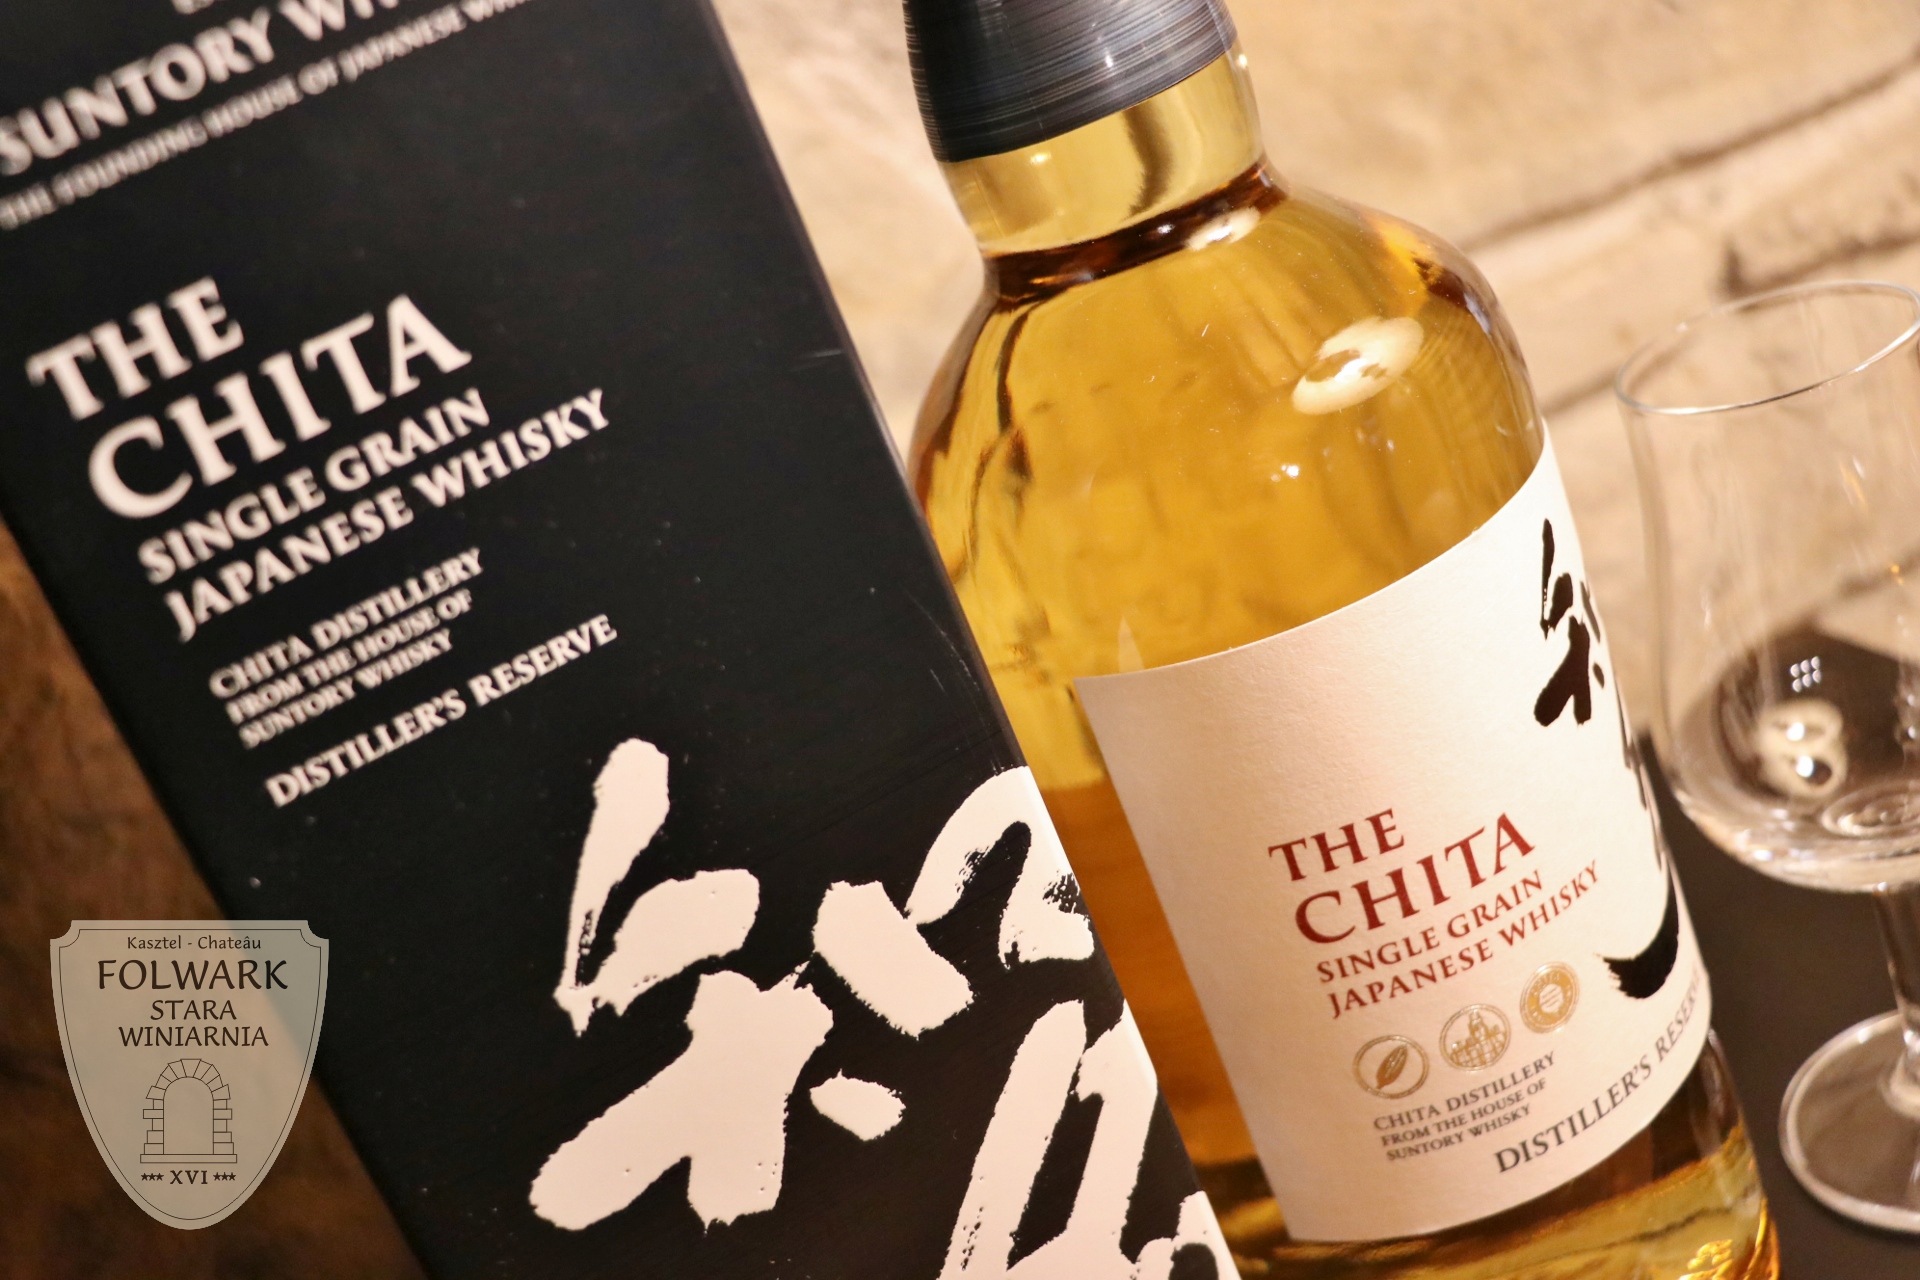 The Chita Single Grain Japanese Whisky